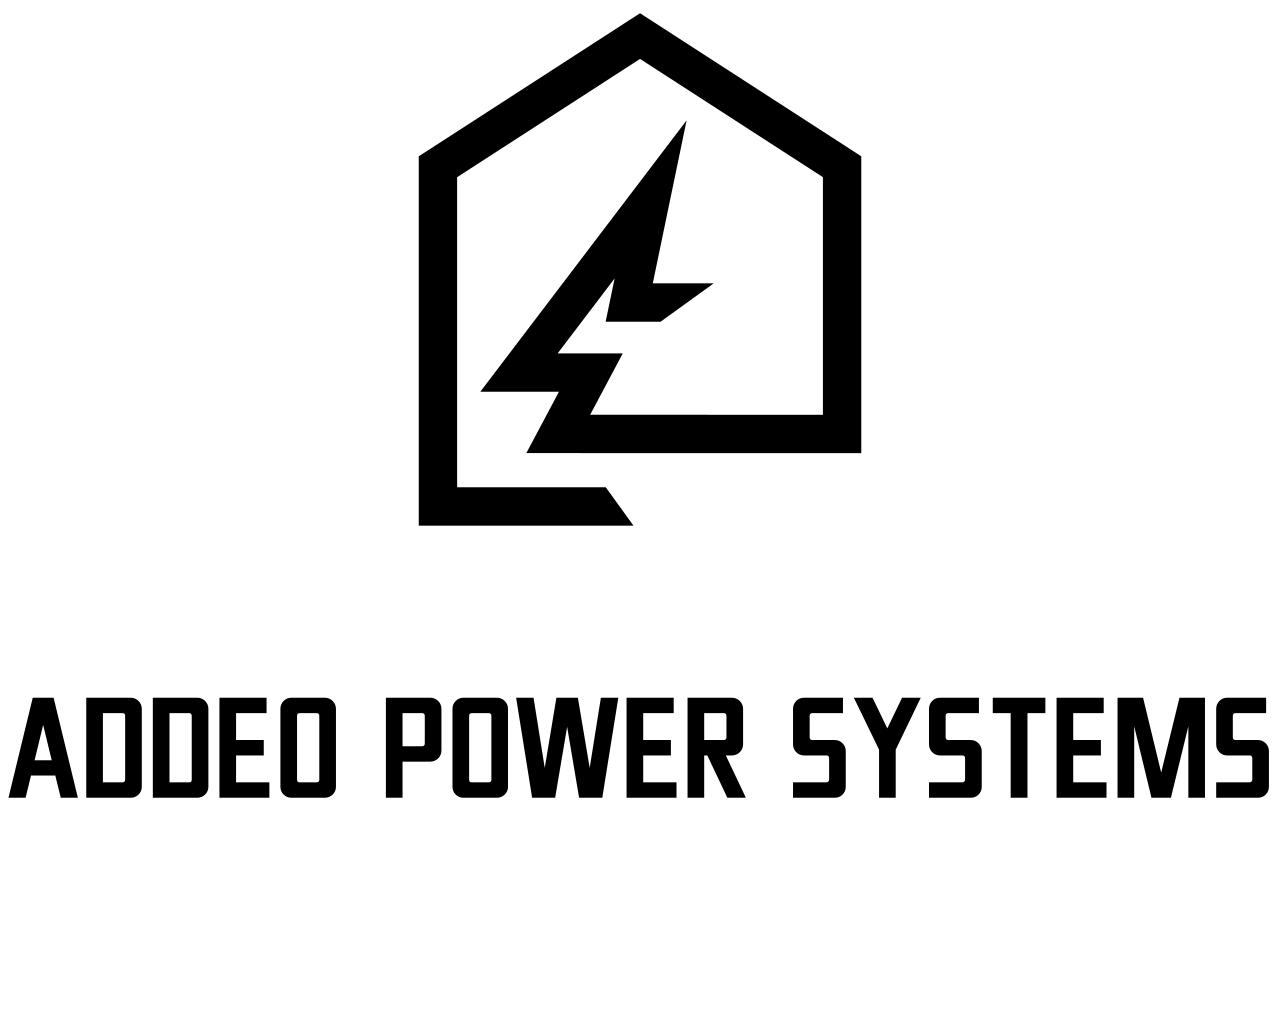 Portable Generator Services Logo